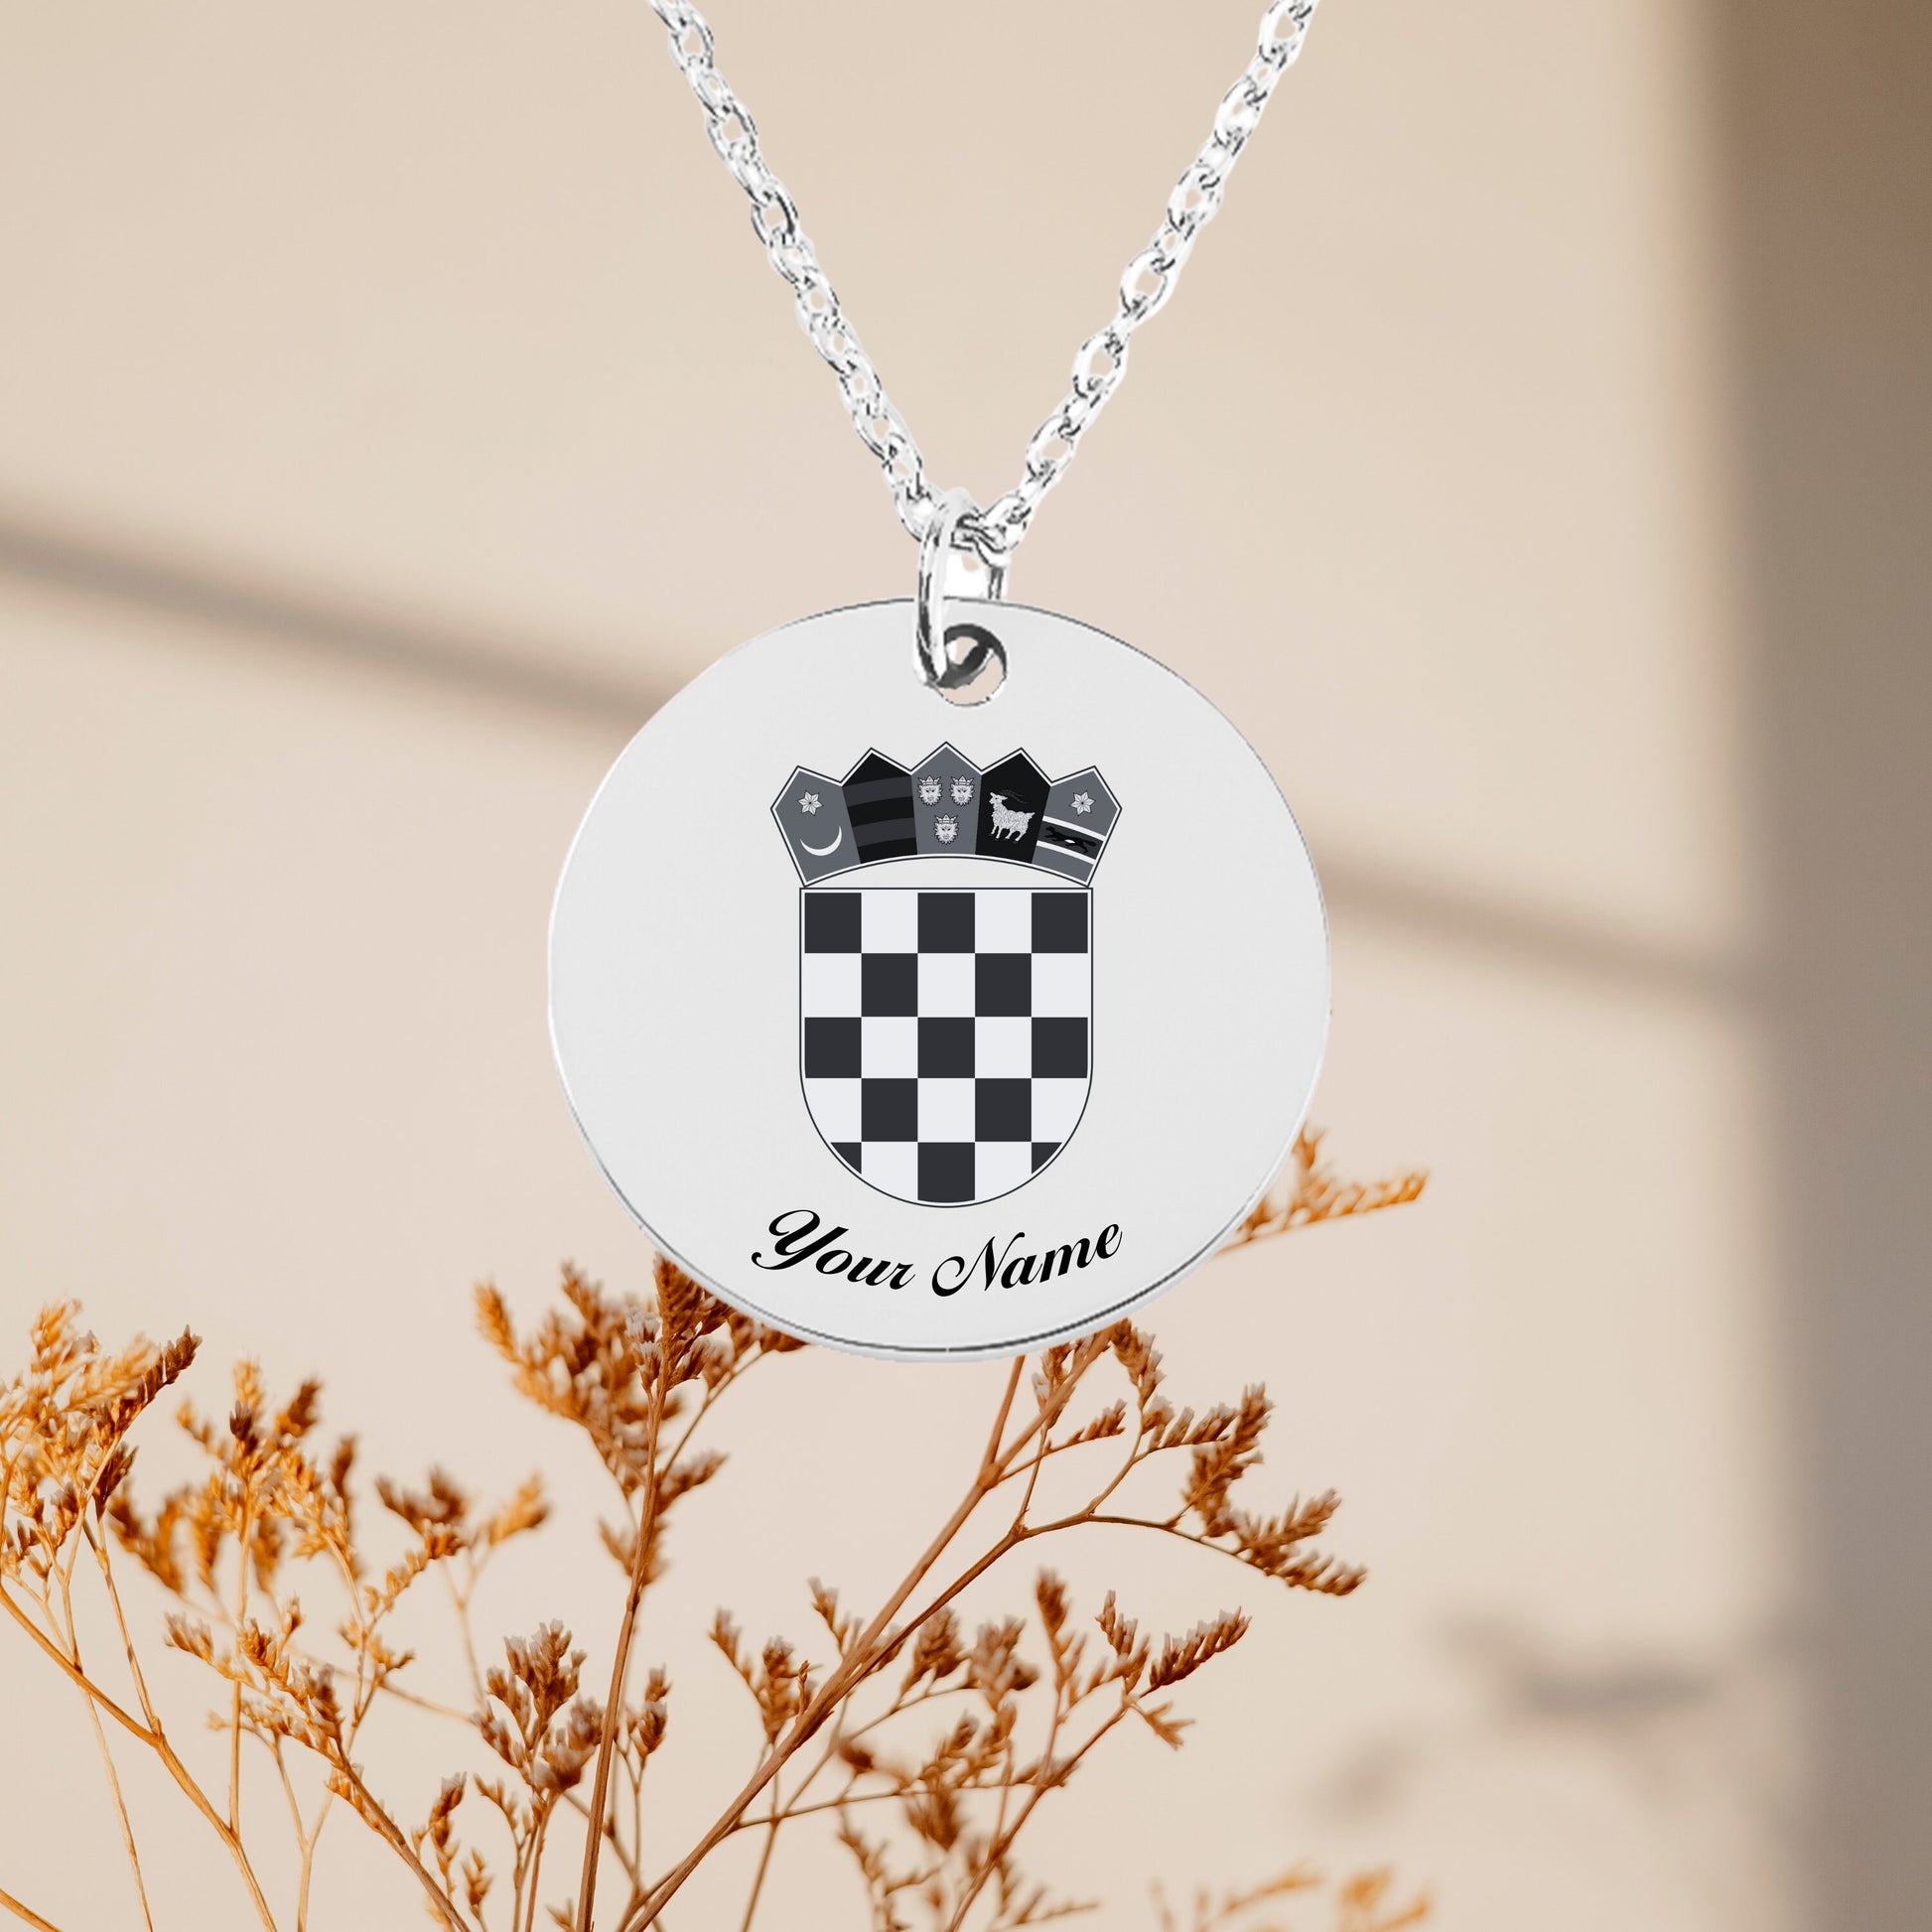 Croatia National Emblem Necklace - Personalizable Jewelry